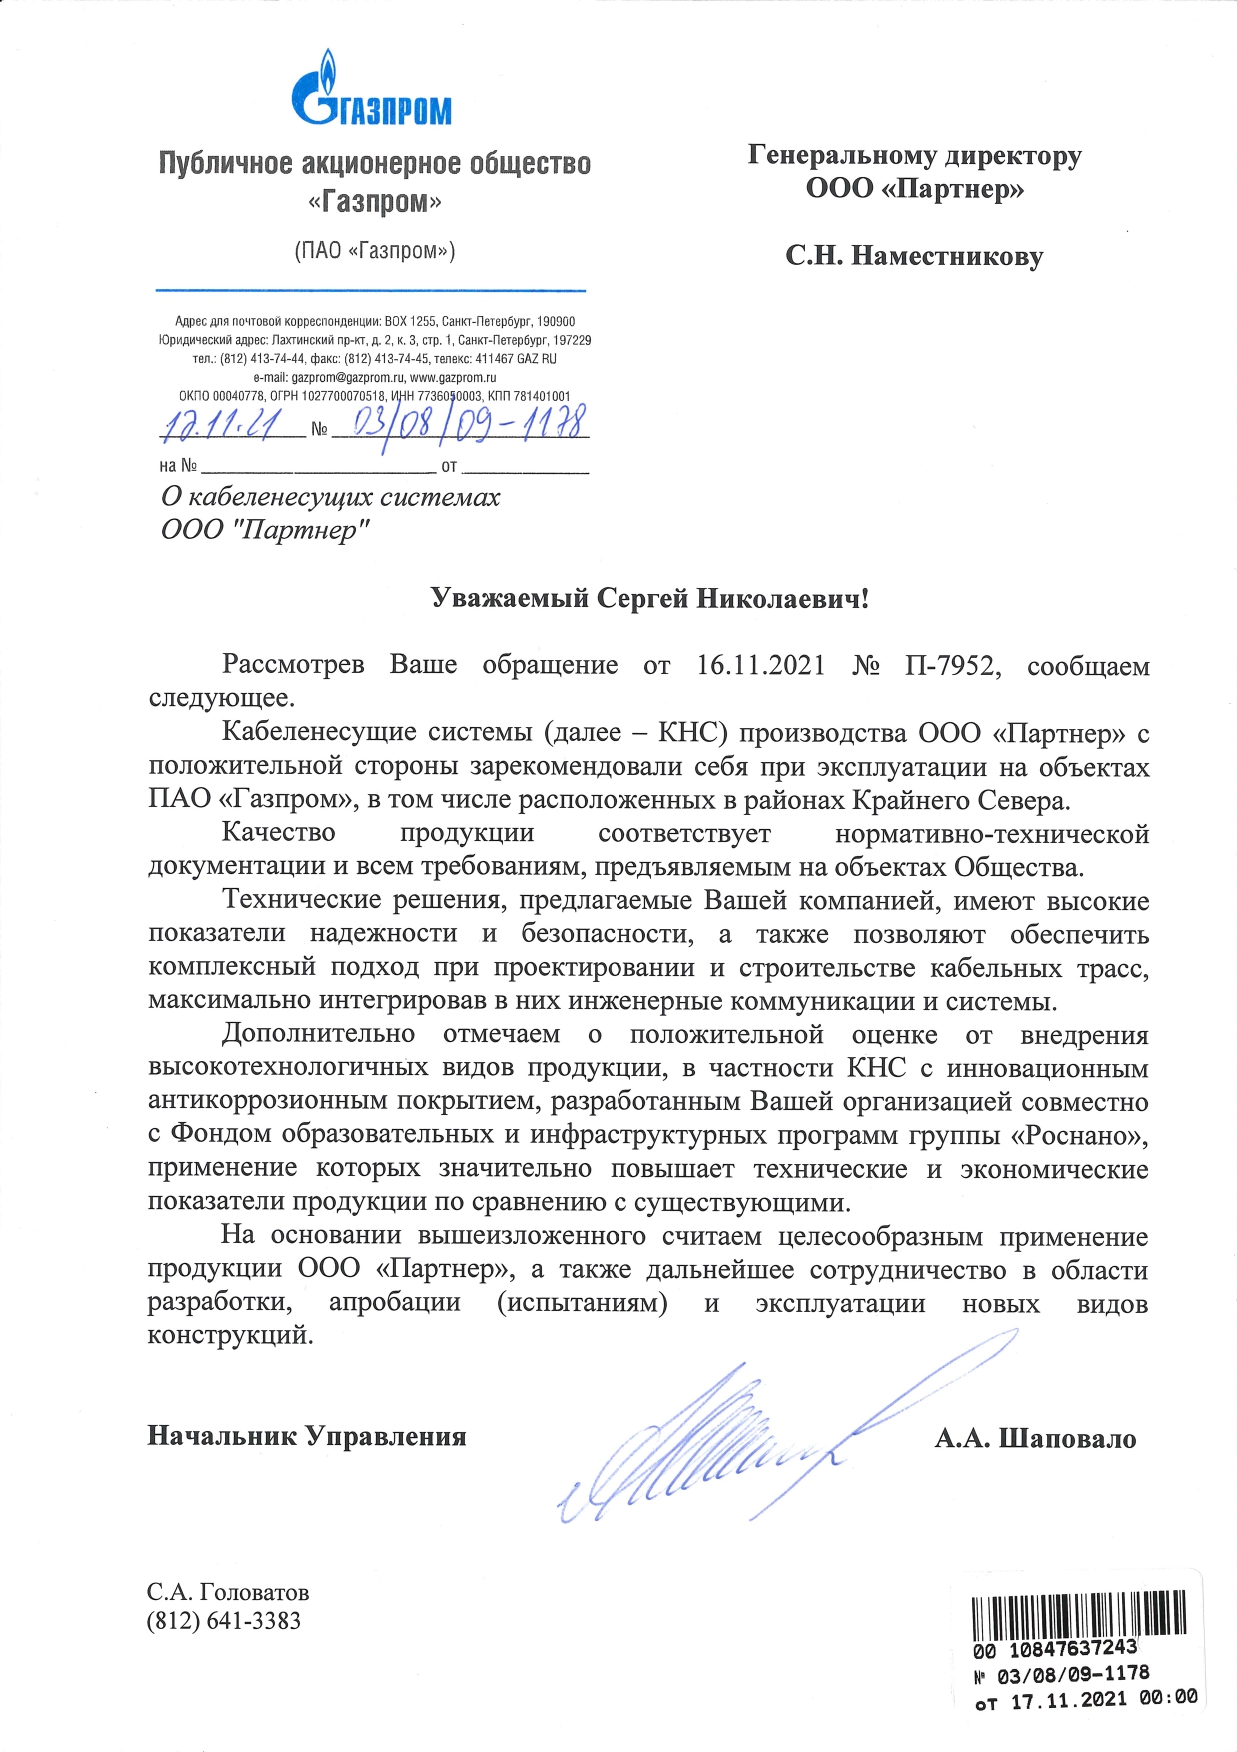 Отзыв о сотрудничестве ПАО Газпром.jpg